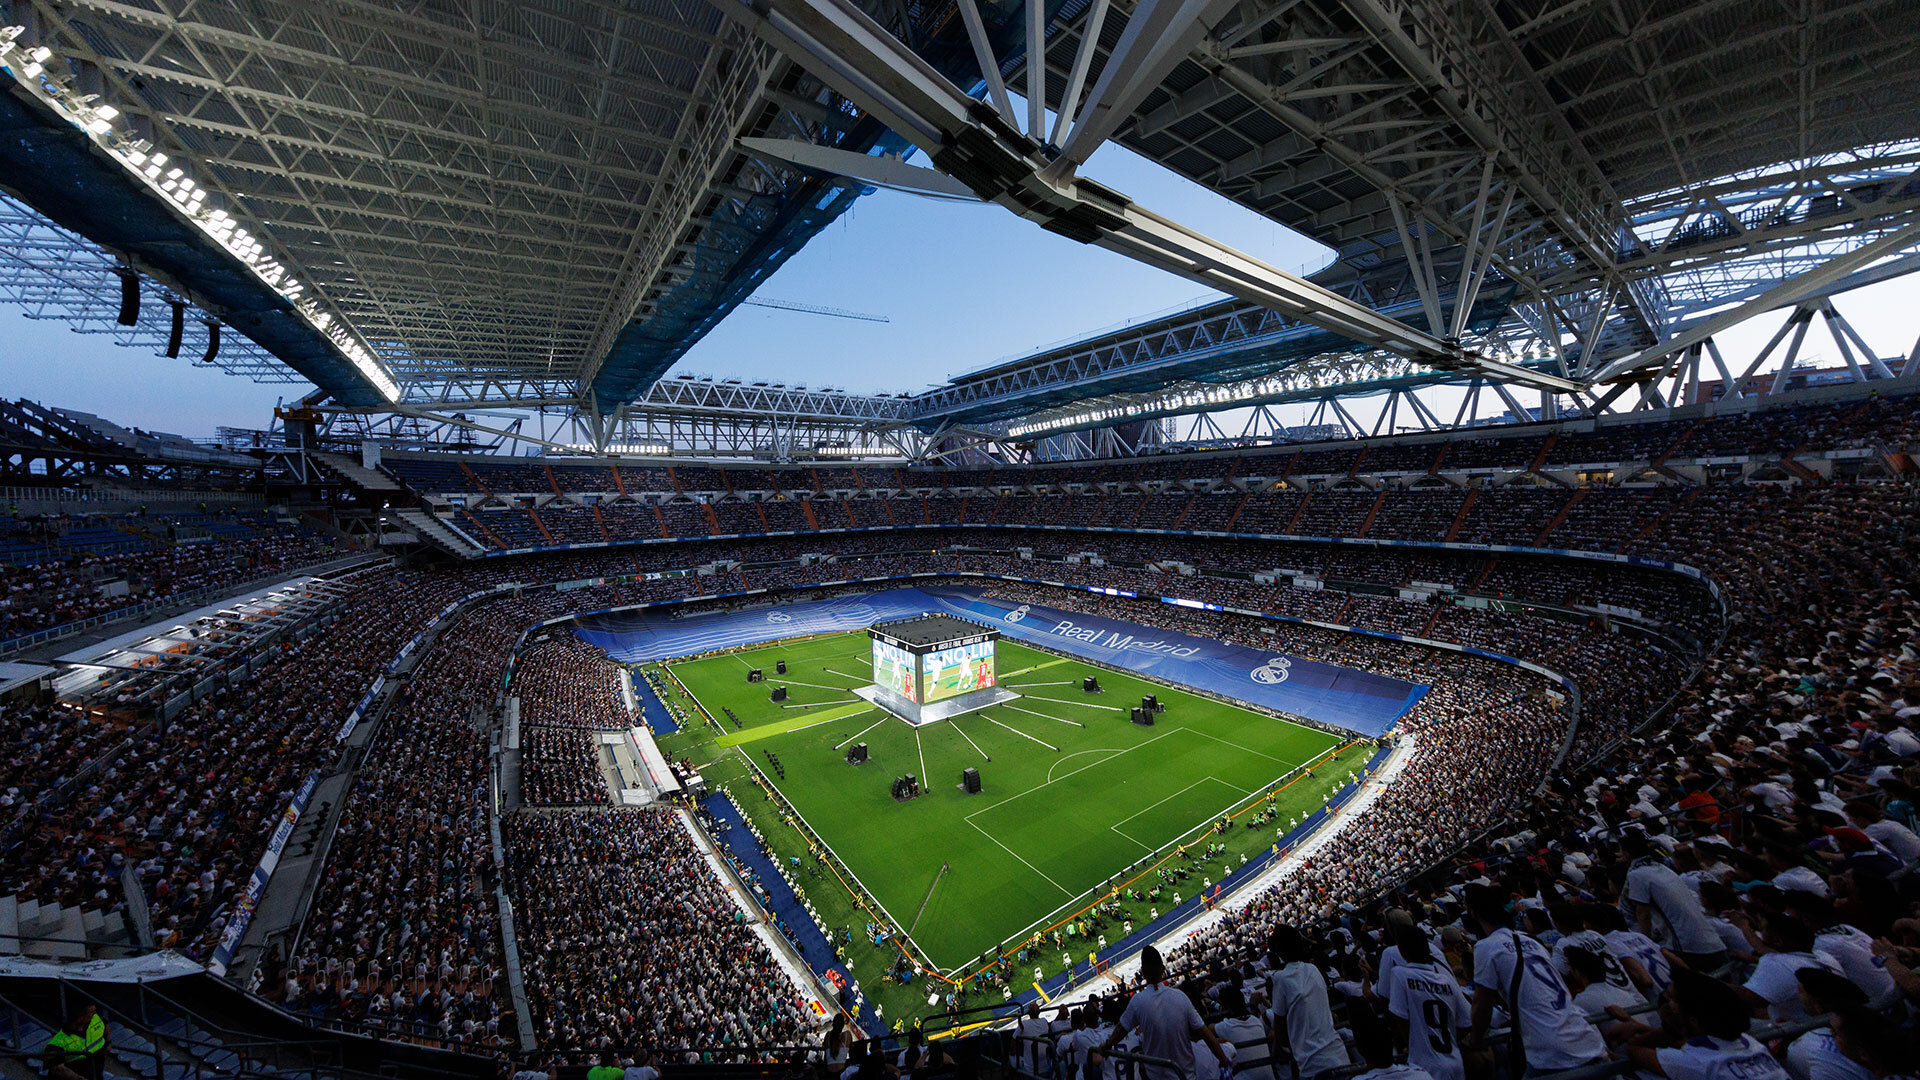 Experience the Champions League Final at the Santiago Bernabéu